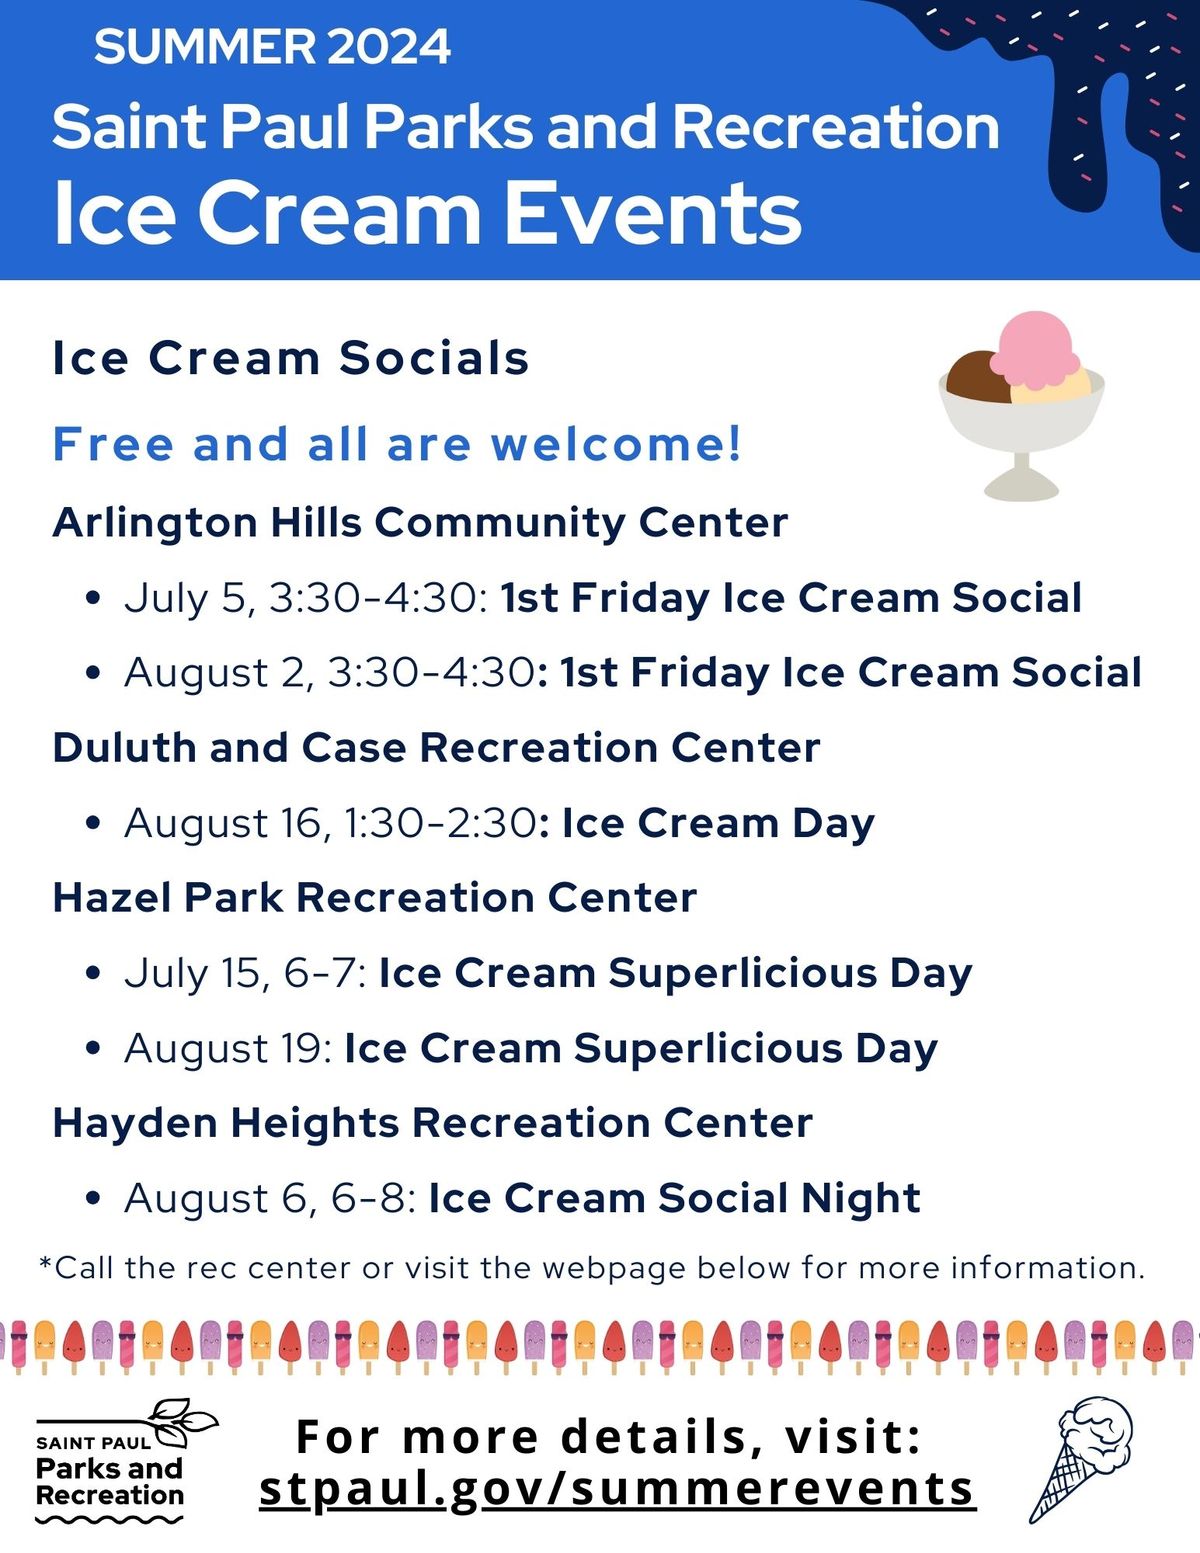 Ice Cream Social (Arlington Hills)